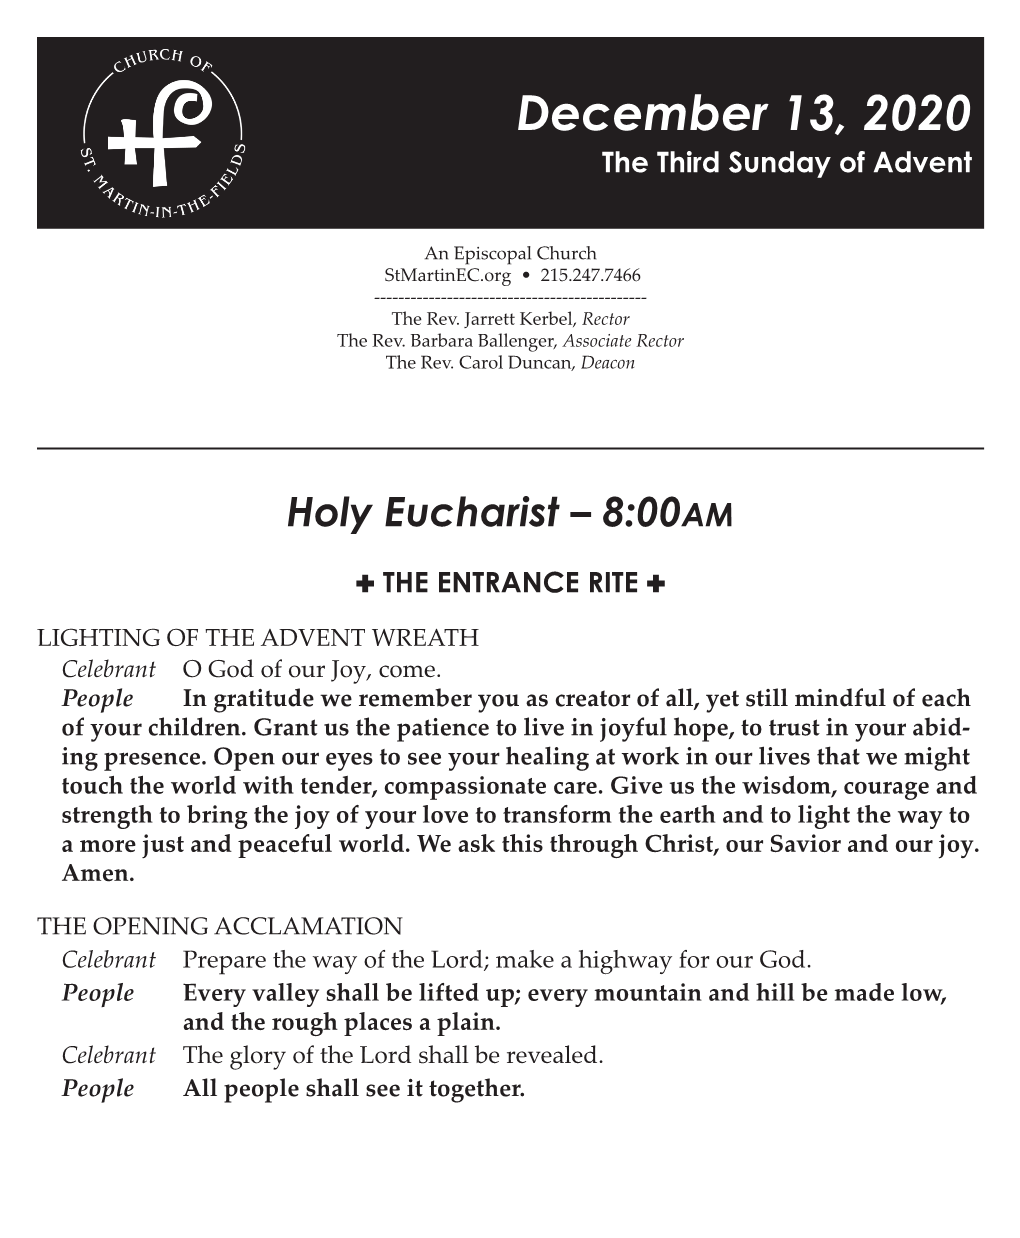 December 13, 2020 the Third Sunday of Advent